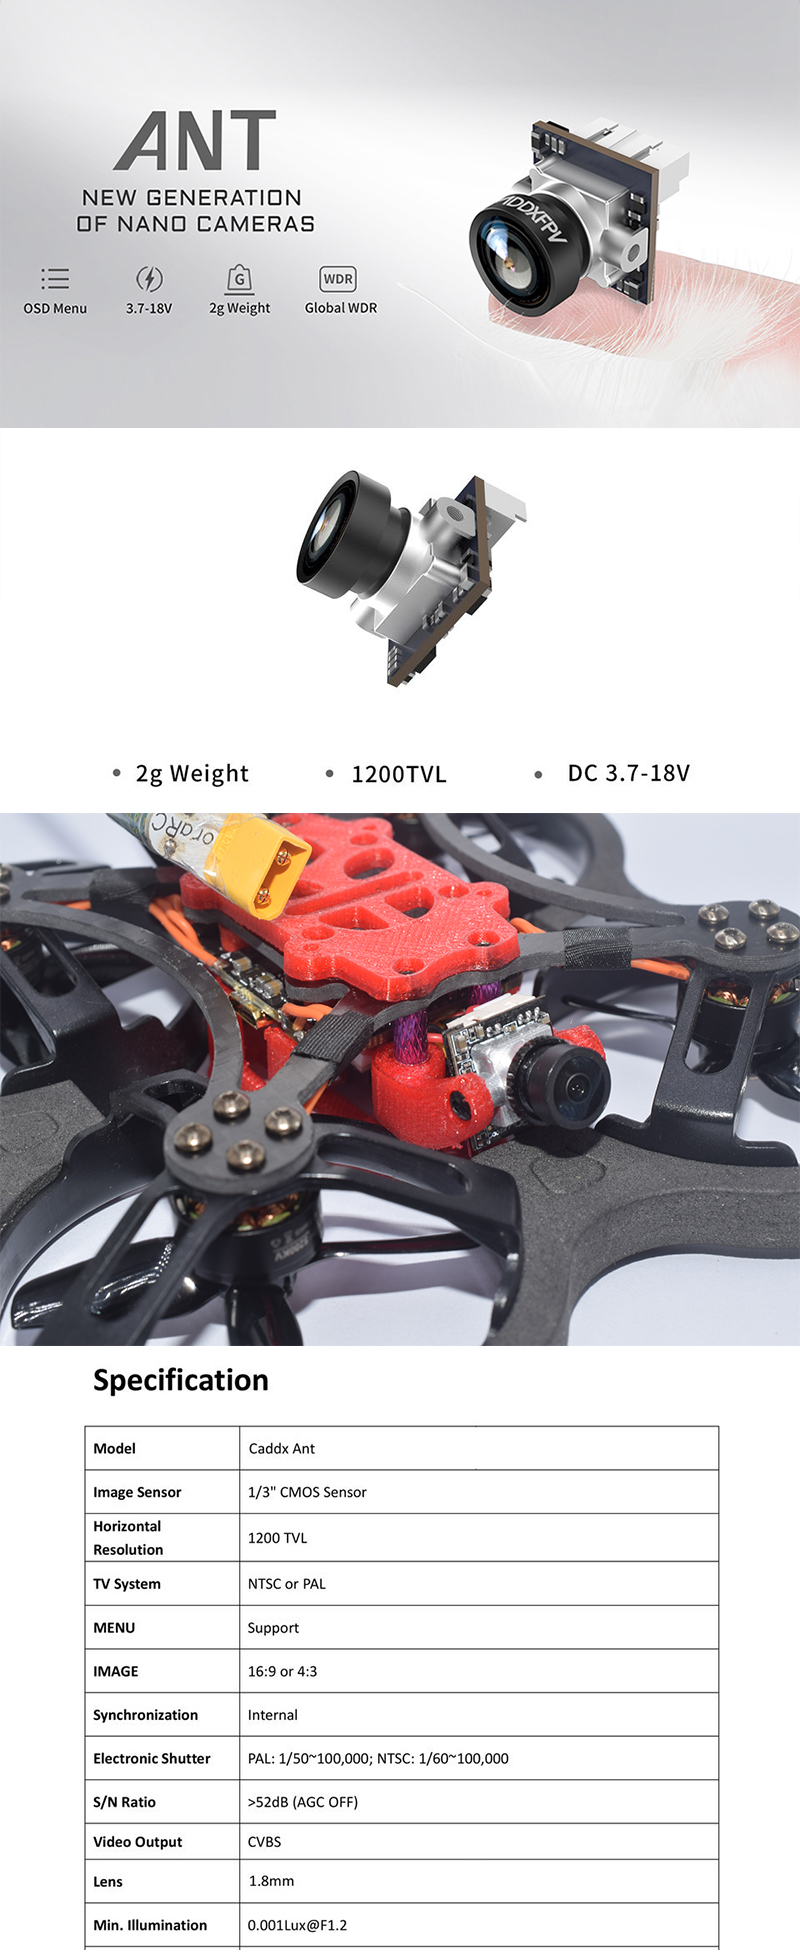 AuroraRC-Smooth-R-100mm-2-Inch-3-4S-FPV-Racing-Drone-PNPBNF-Caddx-ANT-1200TVL-Camera-F405-20A-1204-M-1848431-5